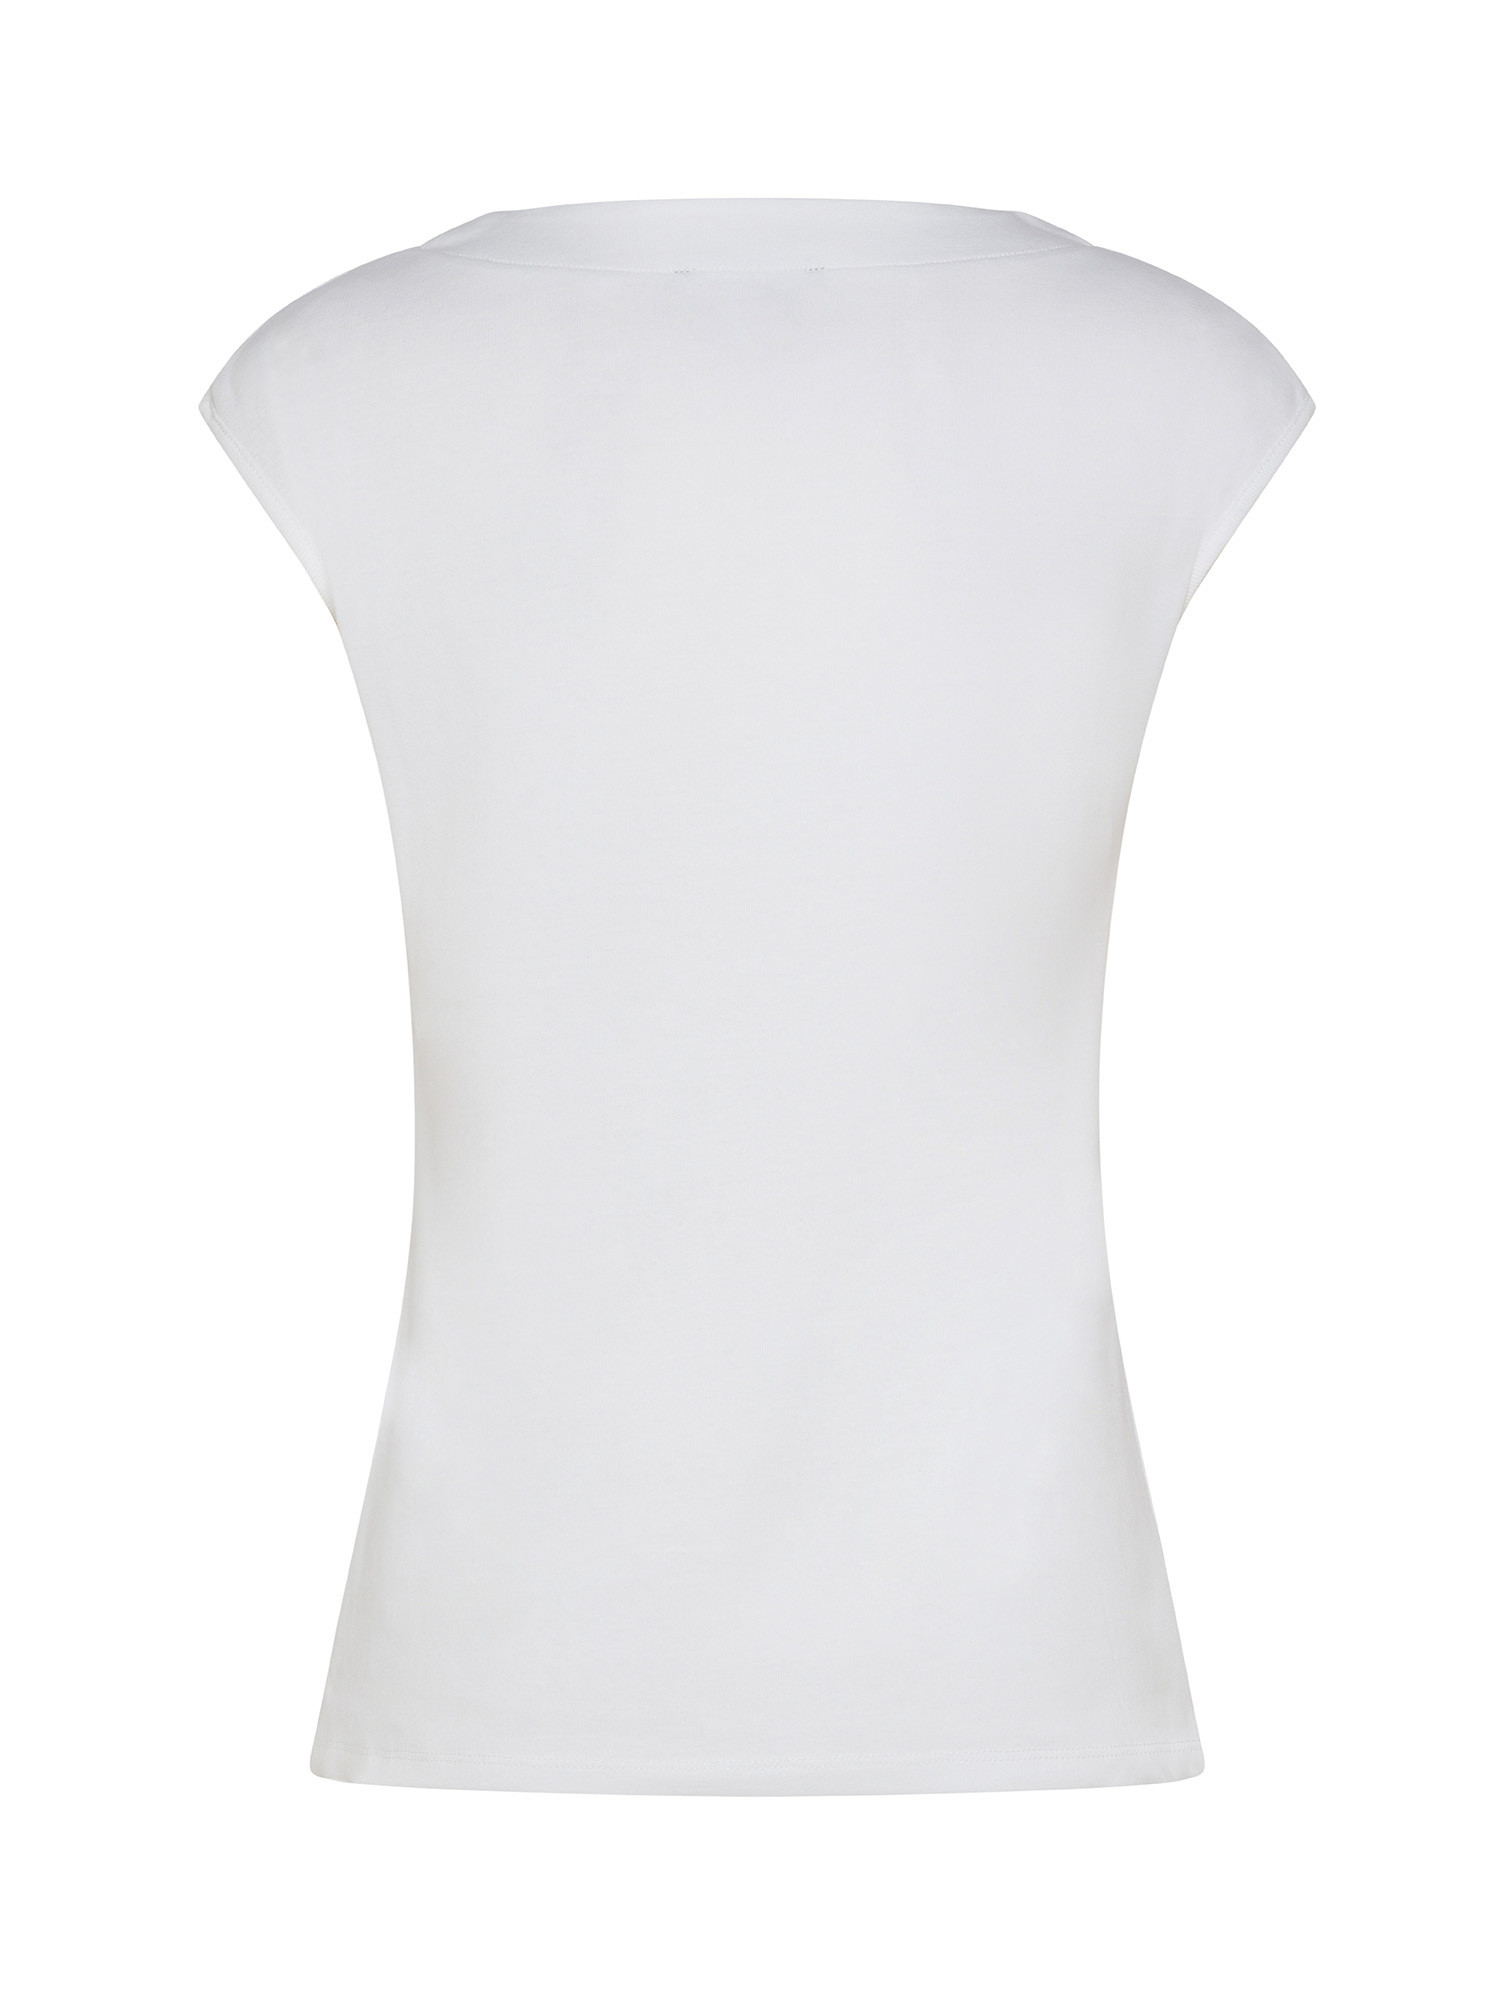 Koan - T-shirt in cotone con borchiette, Bianco, large image number 1